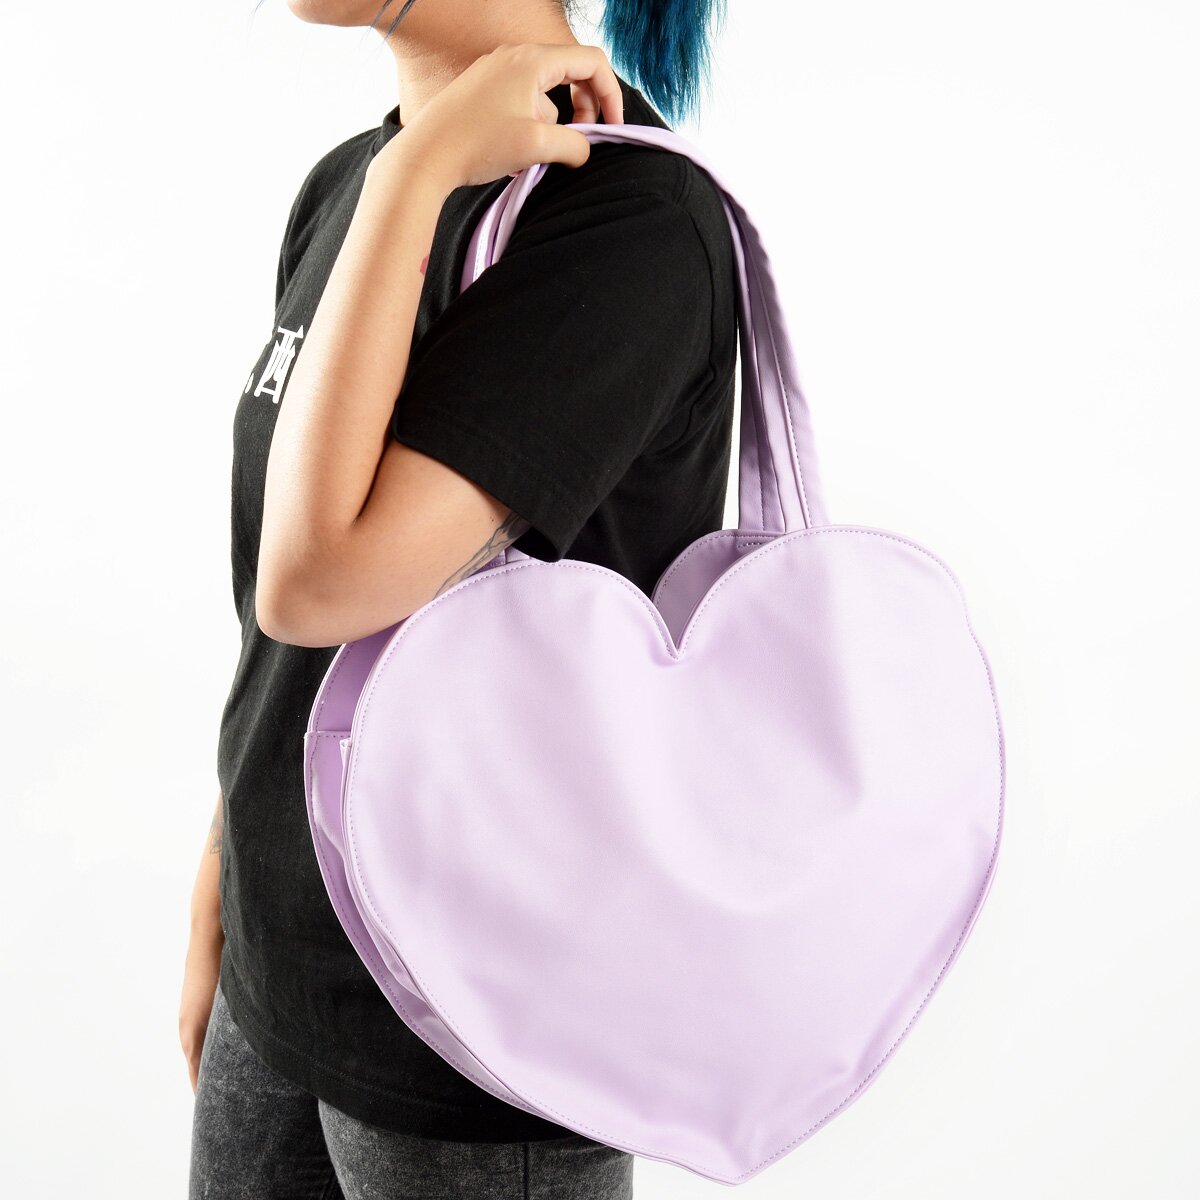 The Heart Handbag– Persona the Shop